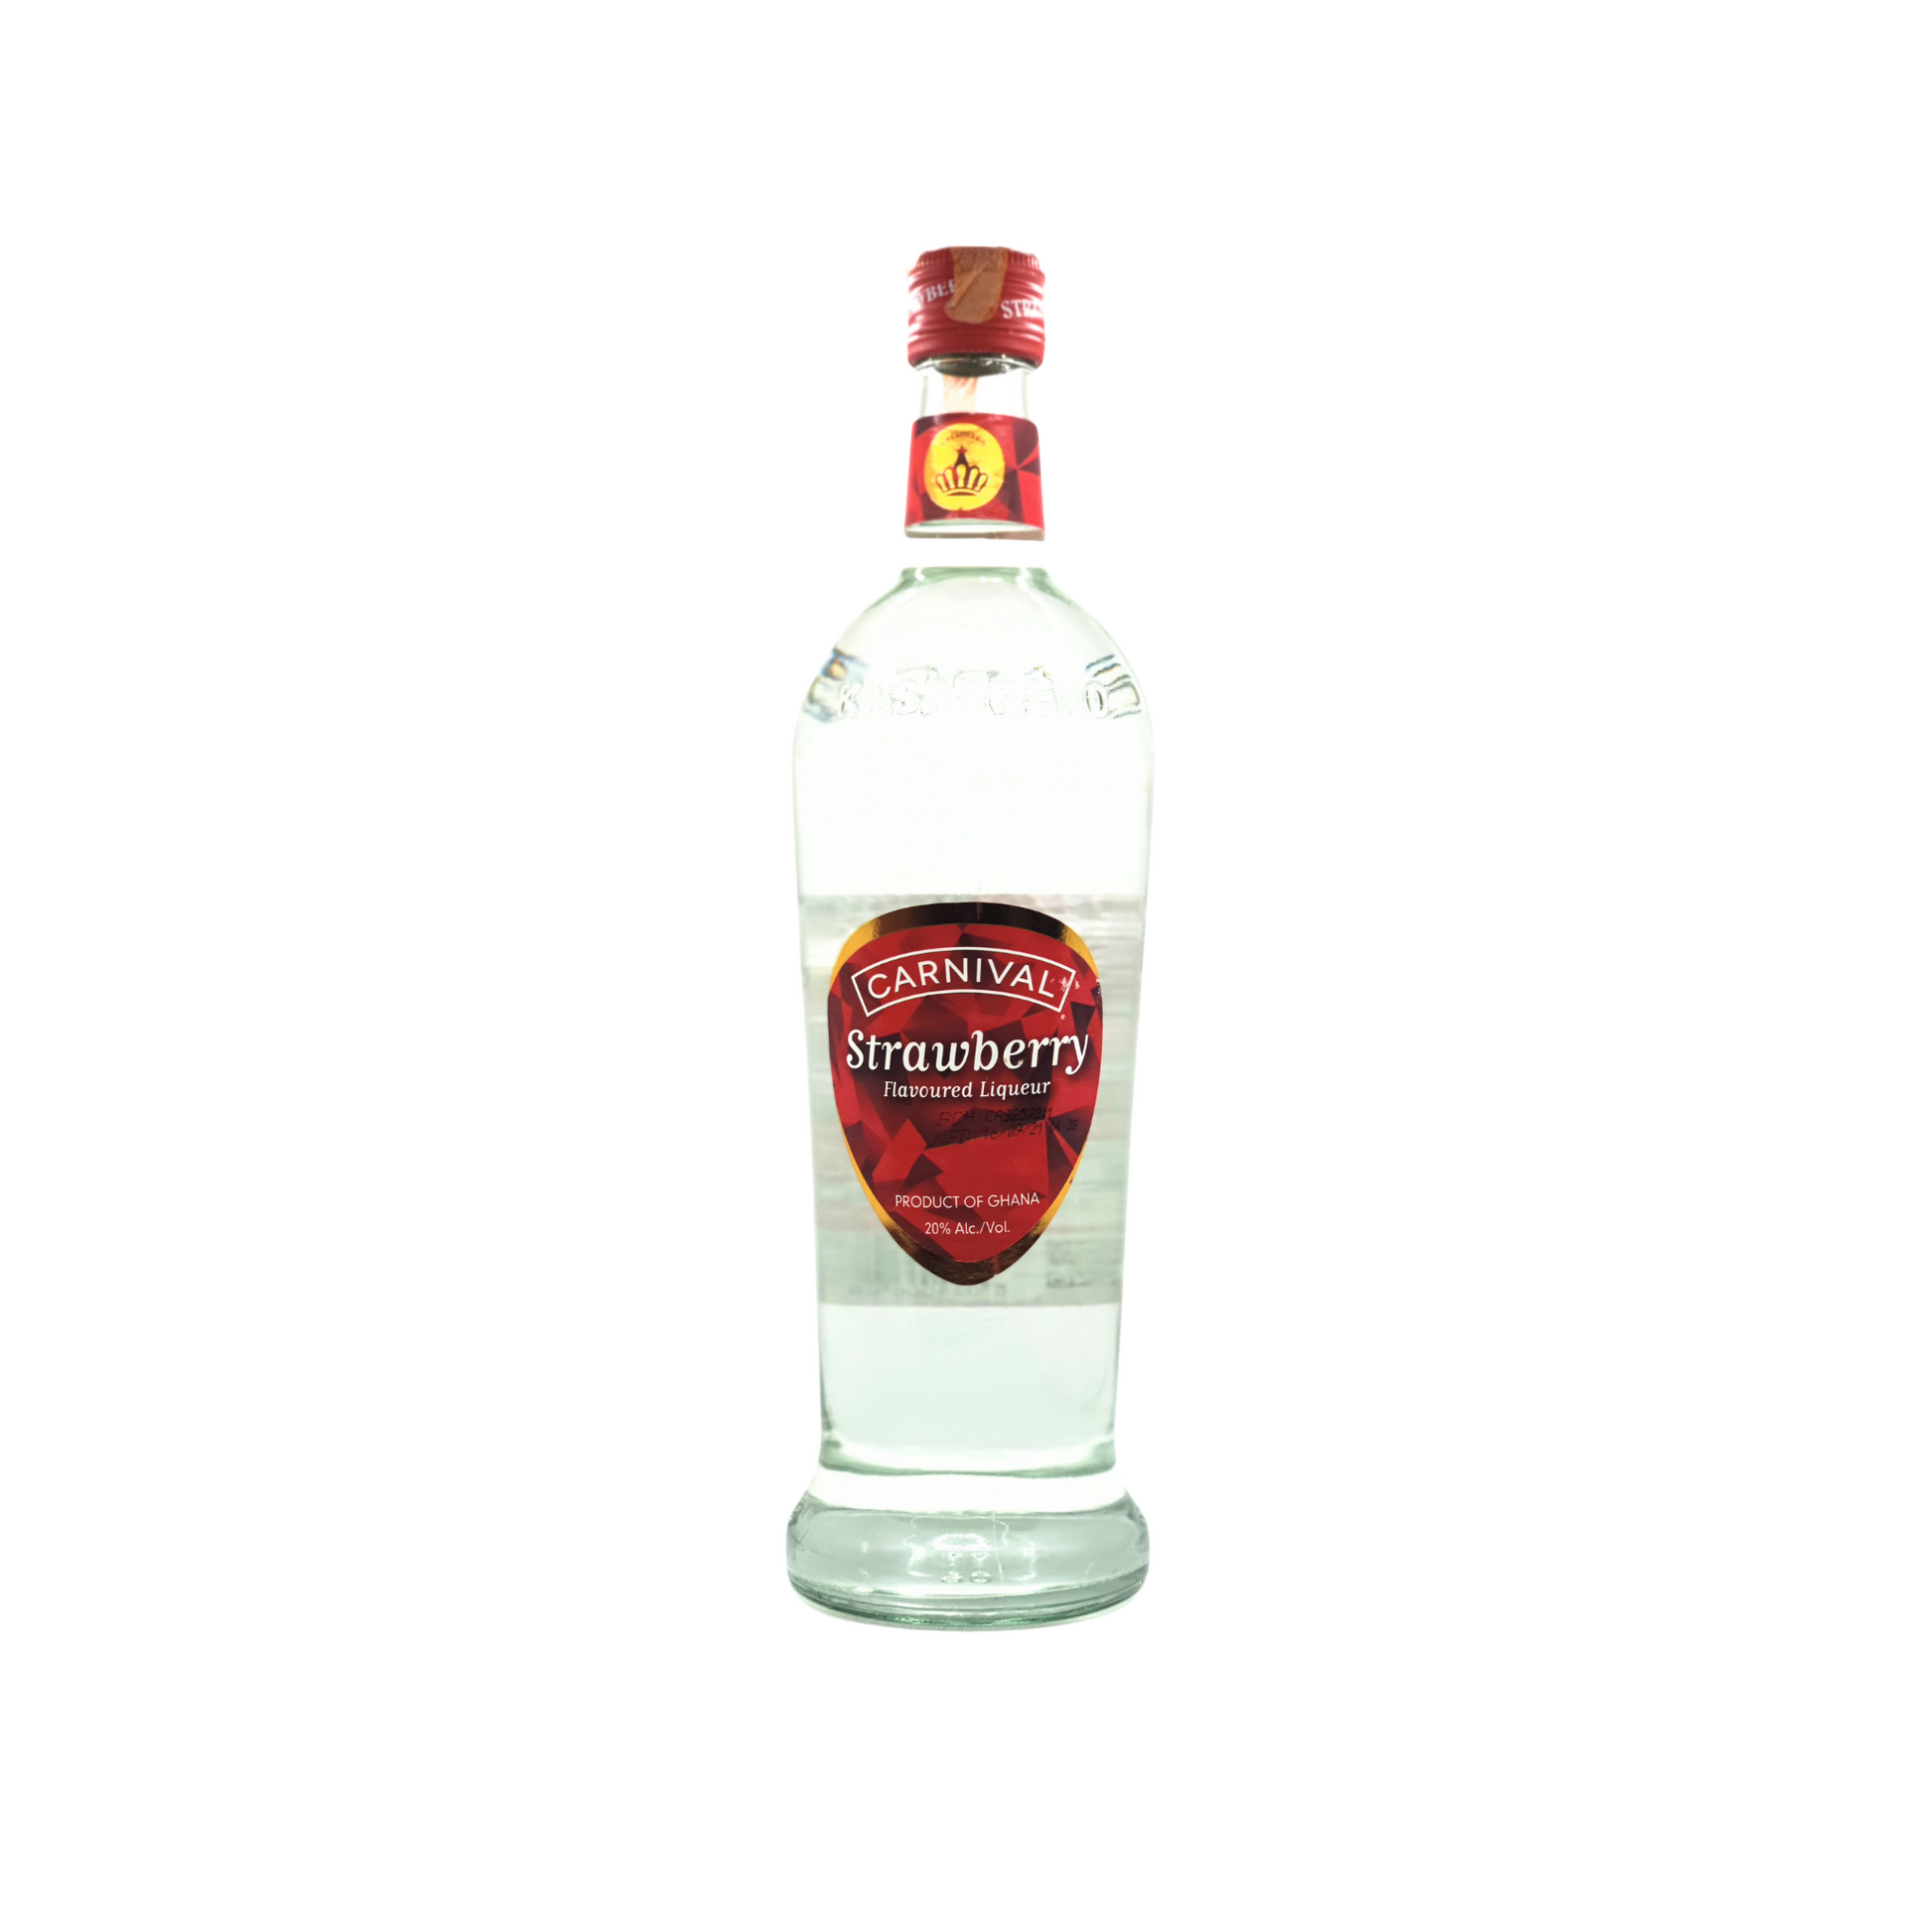 750 millilitre bottle of carnival strawberry flavoured liqueur